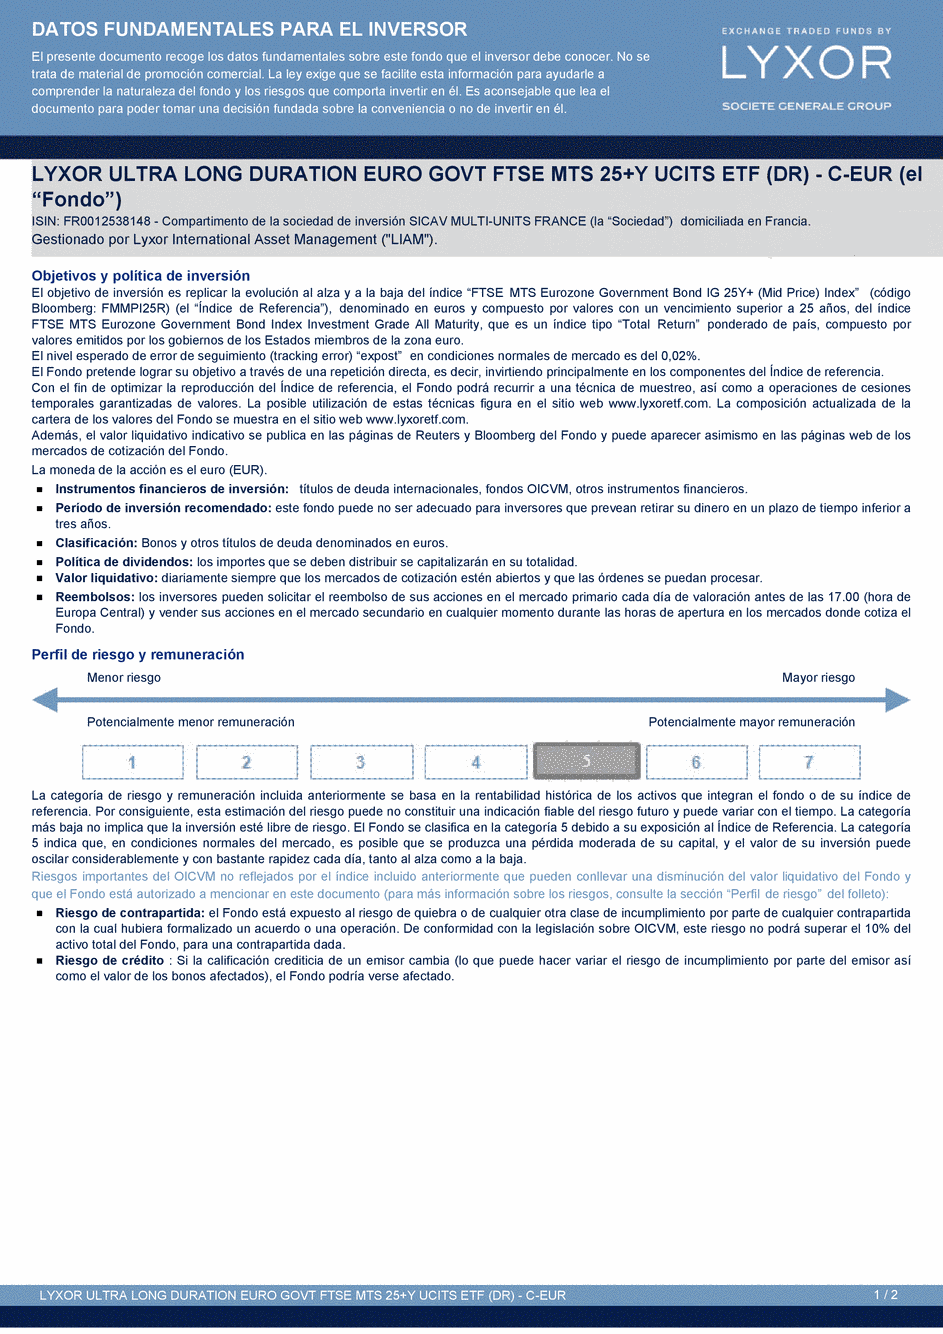 DICI LYXOR ULTRA LONG DURATION EURO GOVT FTSE MTS 25+Y (DR) UCITS ETF - C-EUR - 26/03/2015 - Espagnol